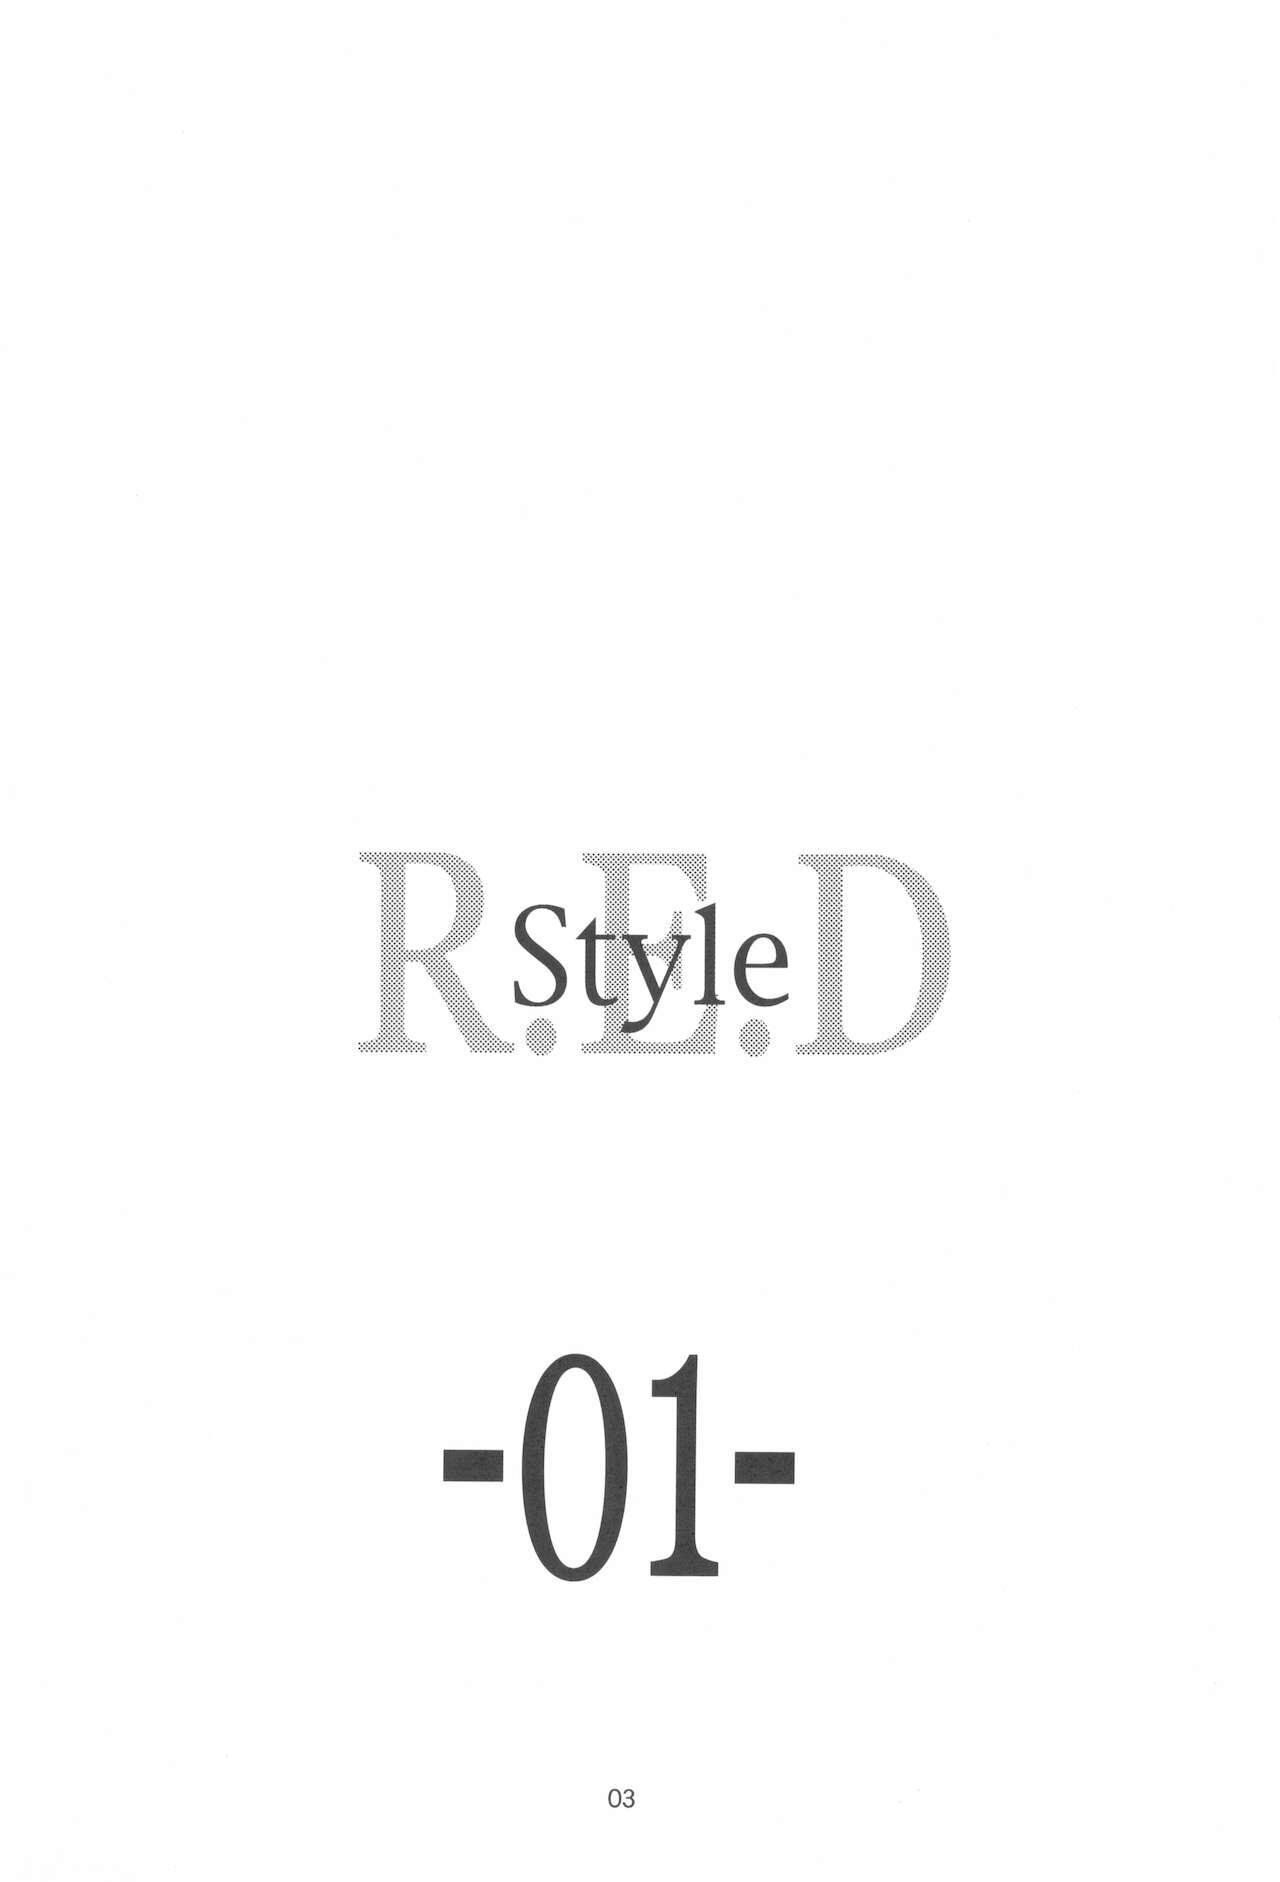 R.E.D Style 2